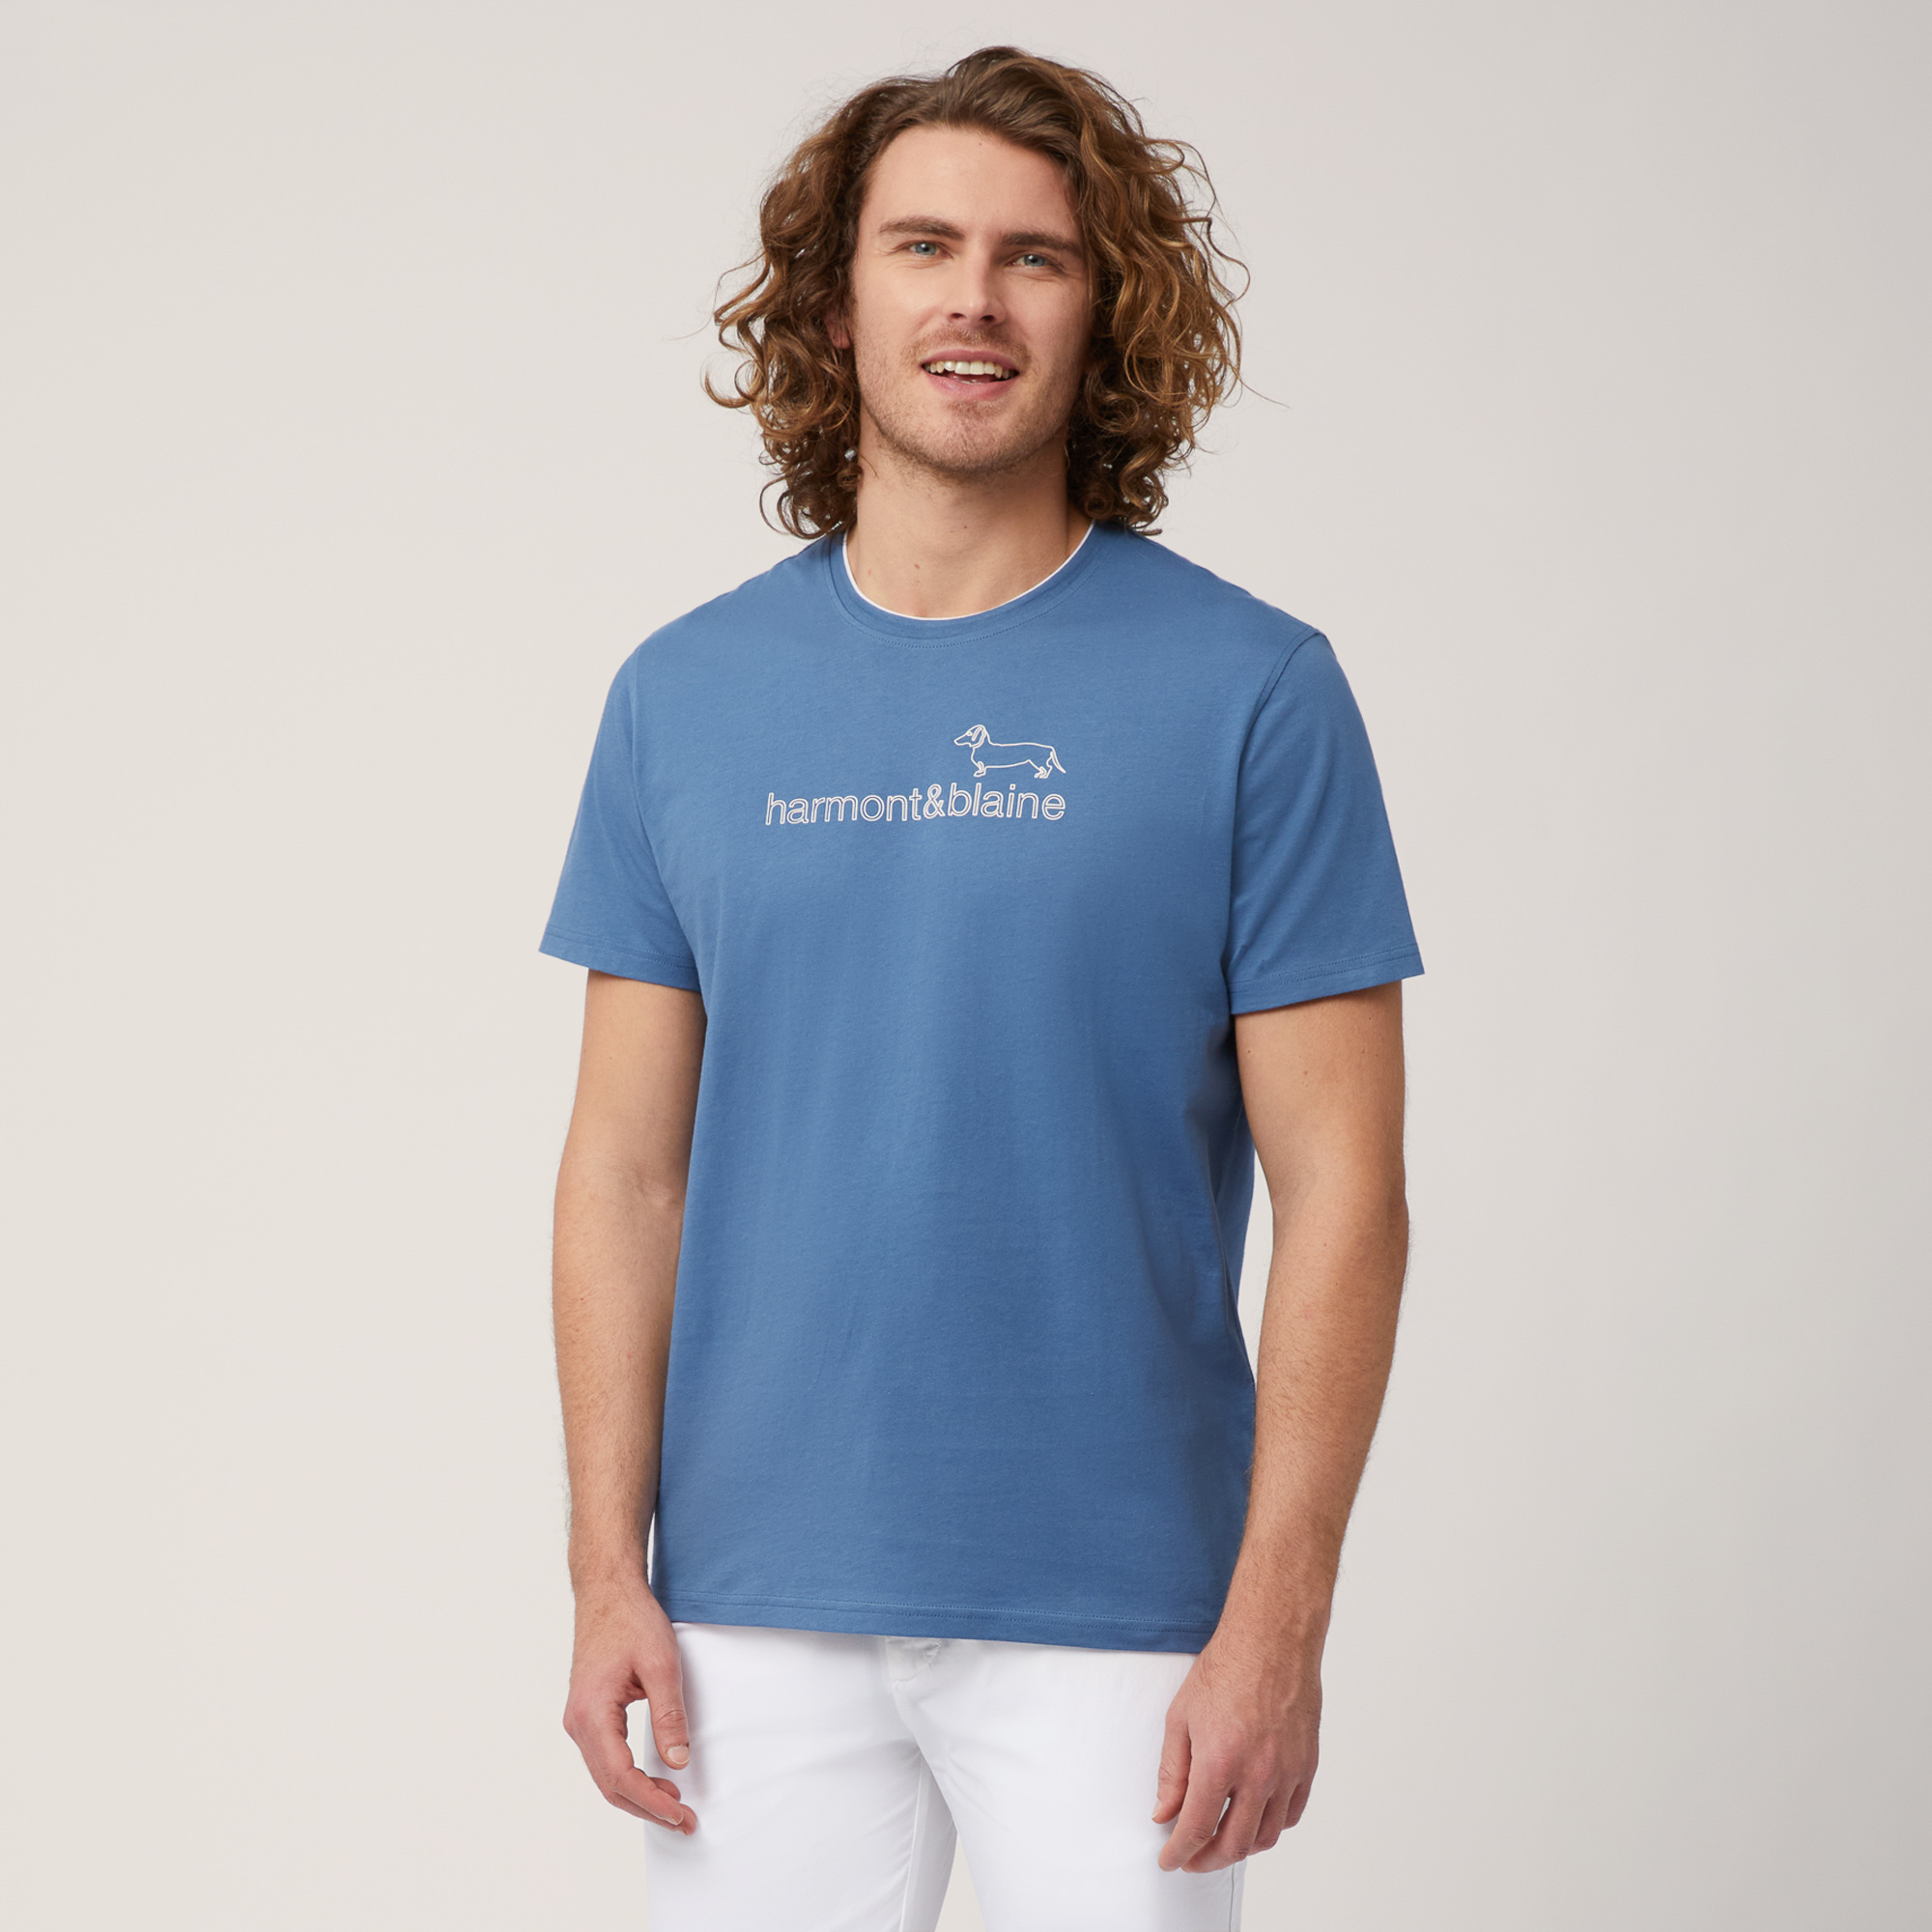 T-Shirt mit Logoaufdruck, Blau, large